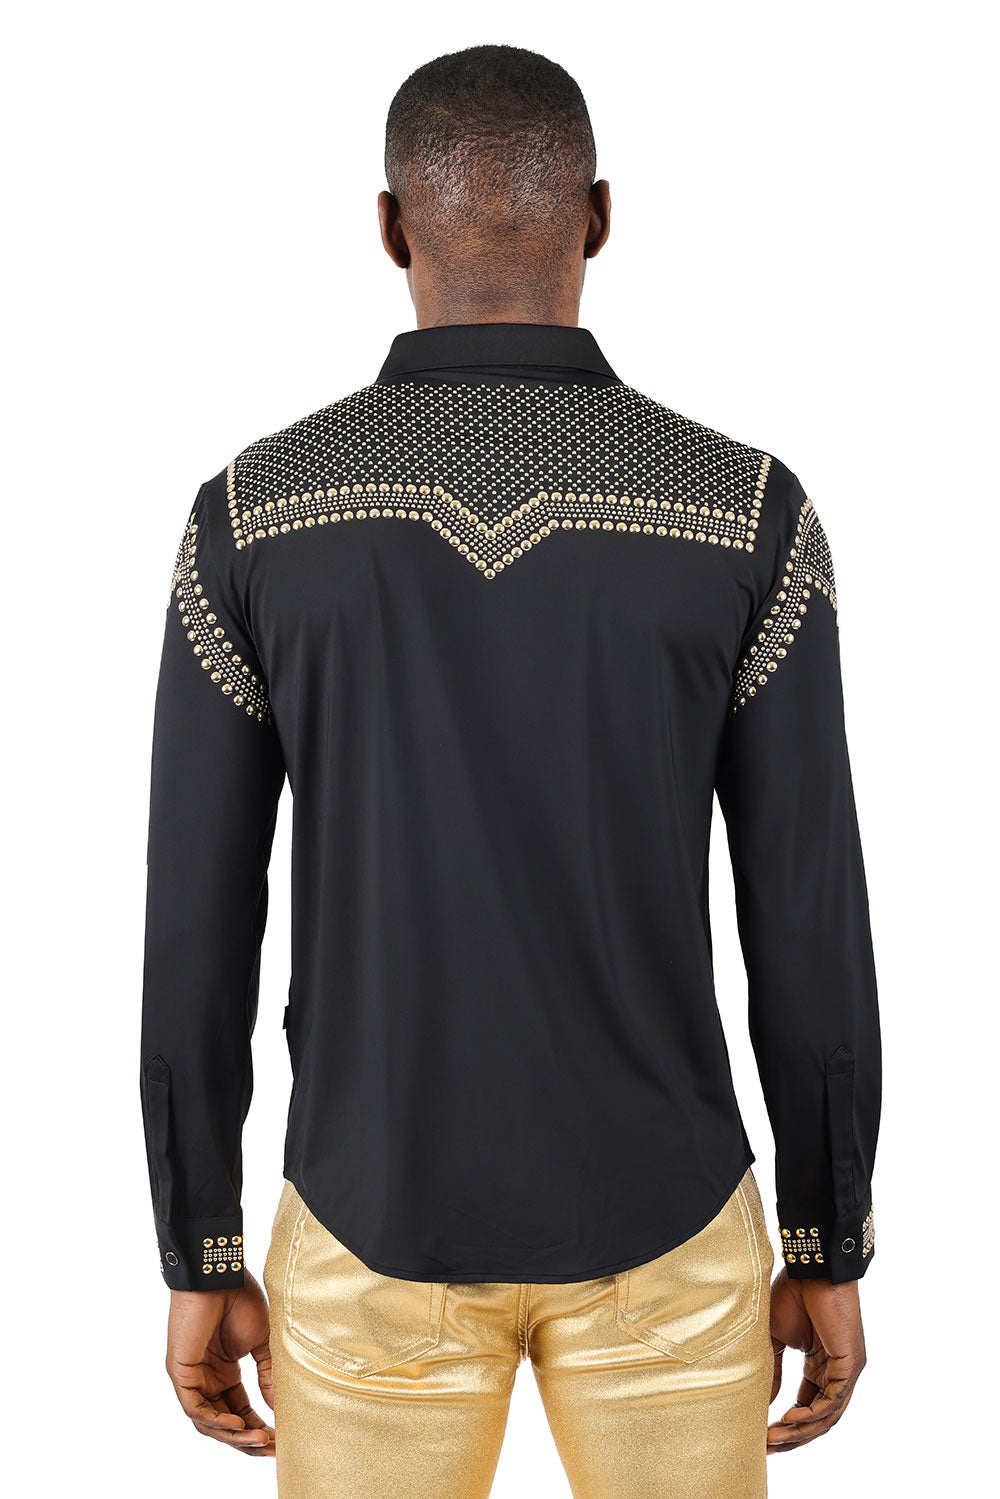 Barabas Men's Studded Premium Solid Long Sleeve Shirts 3B24 Black Gold